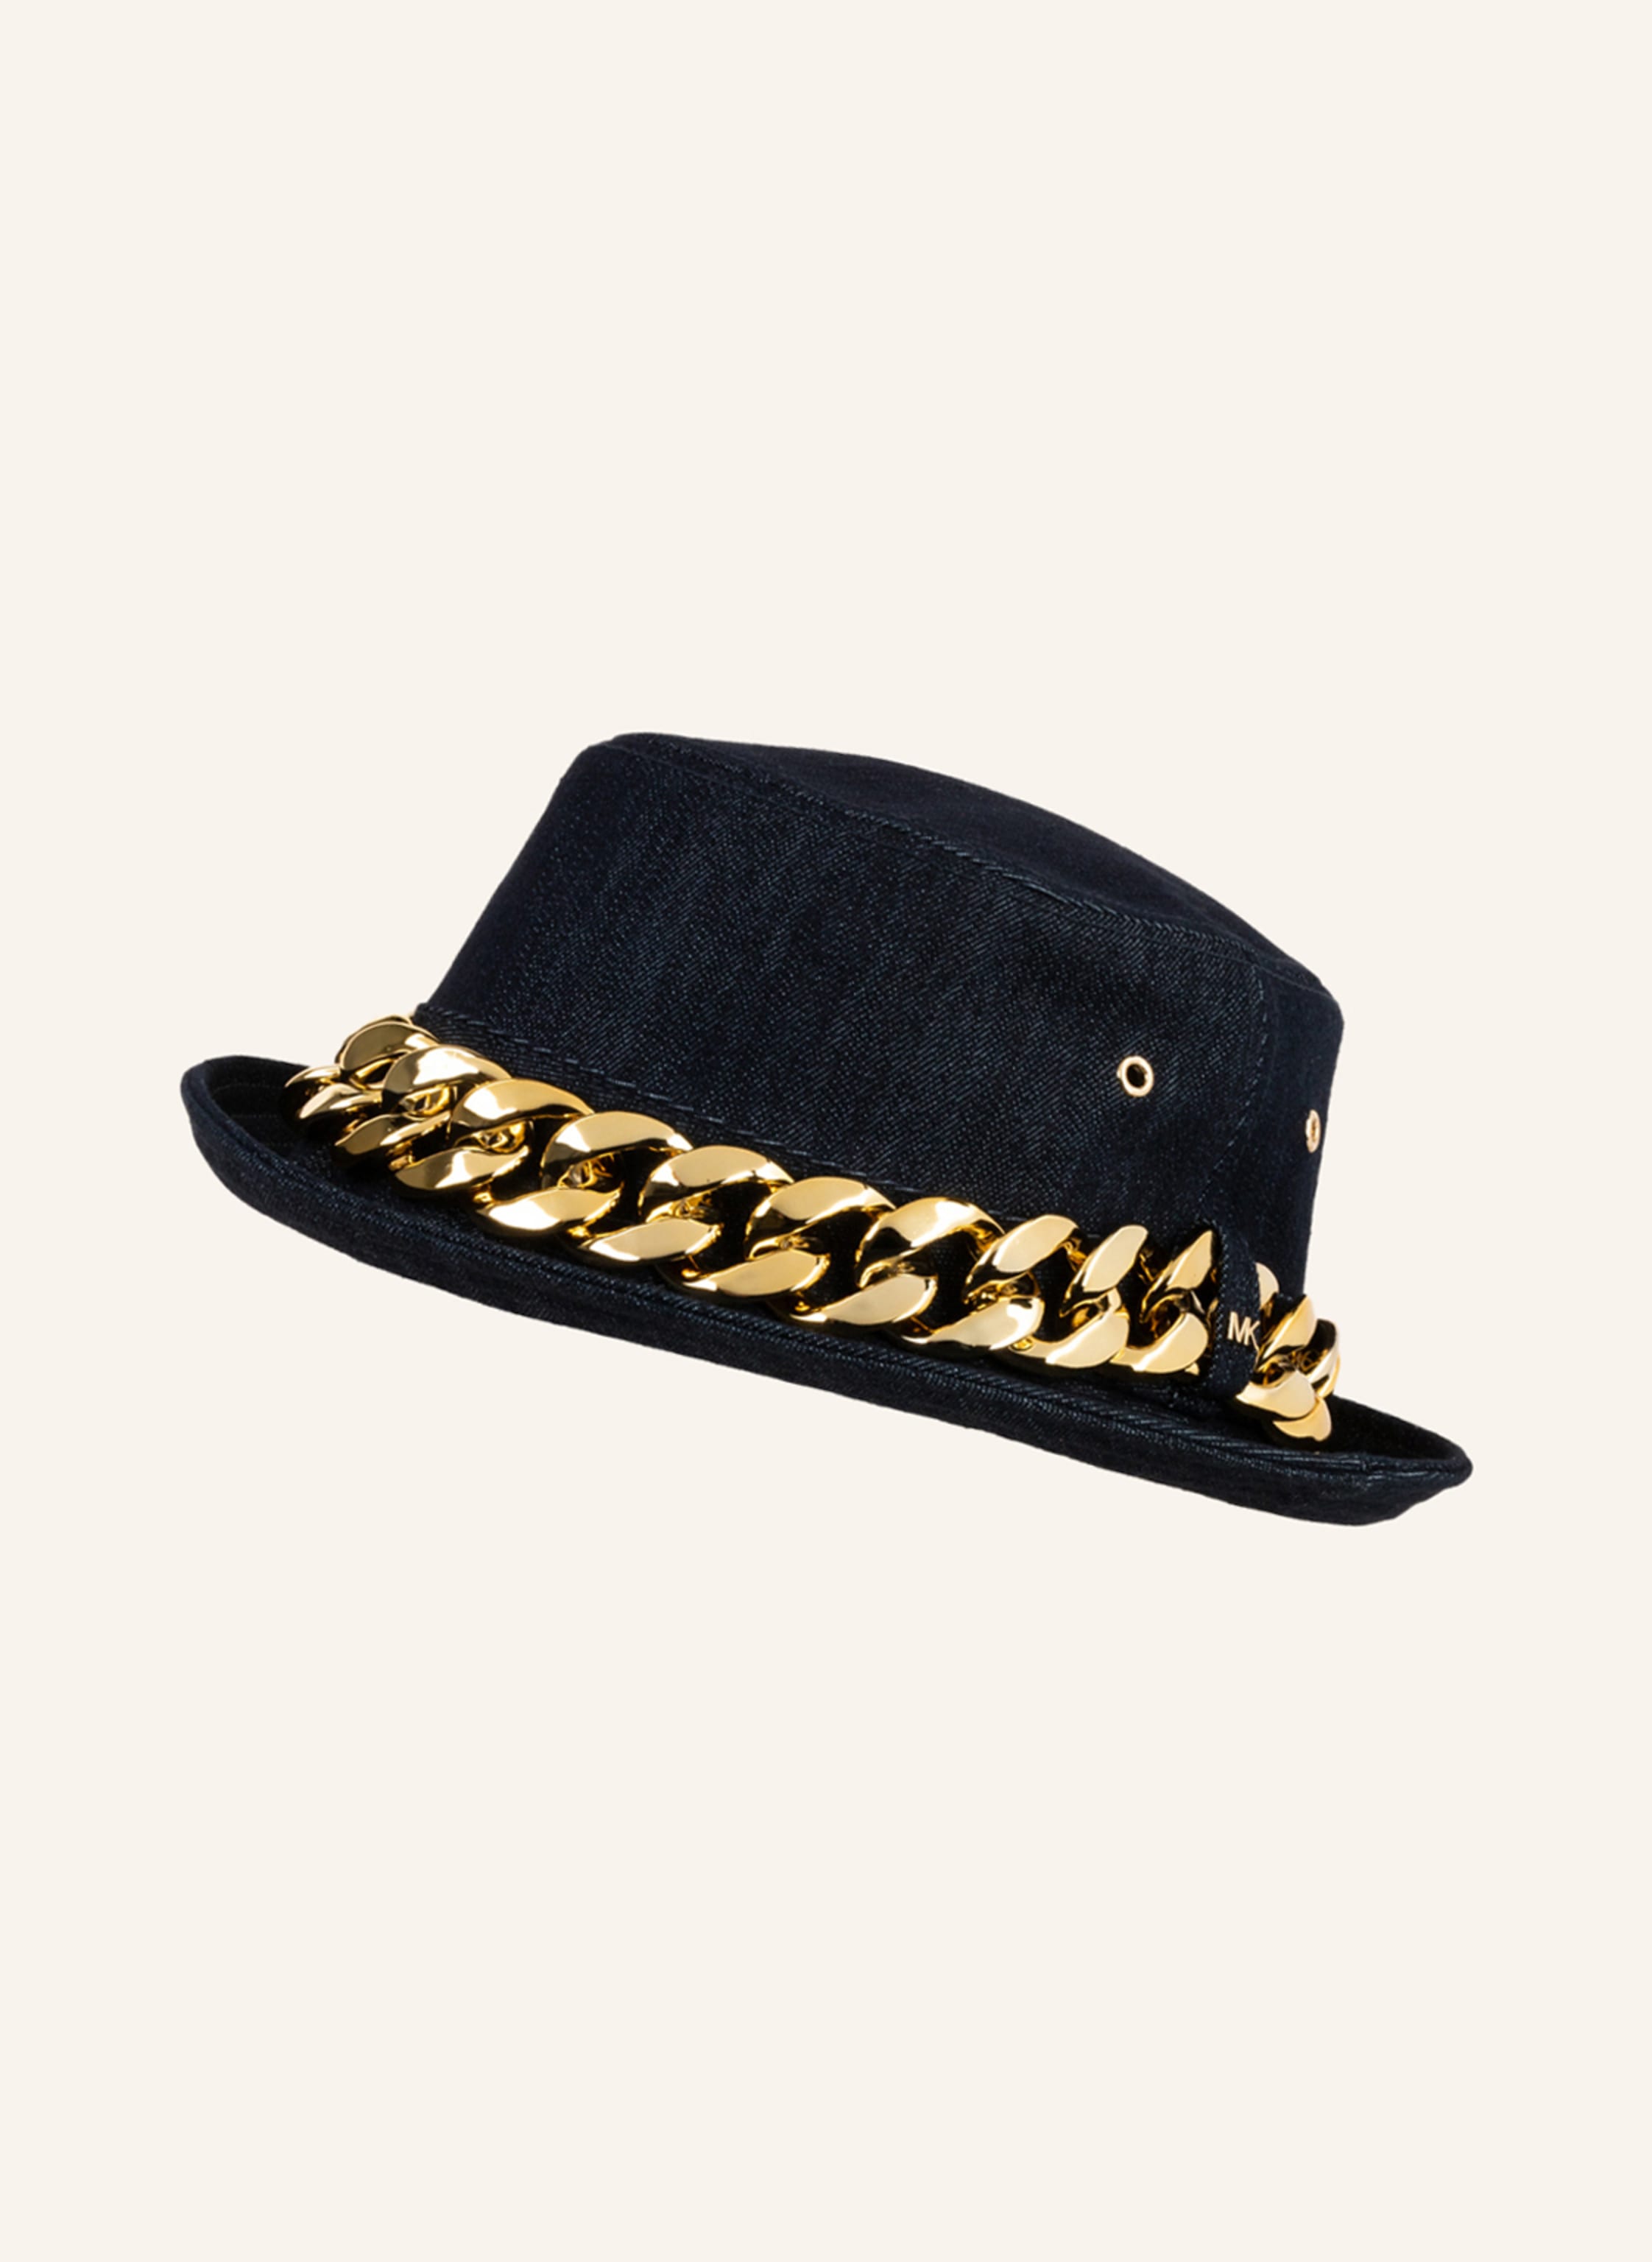 MICHAEL KORS Bucket hat in dark blue | Breuninger